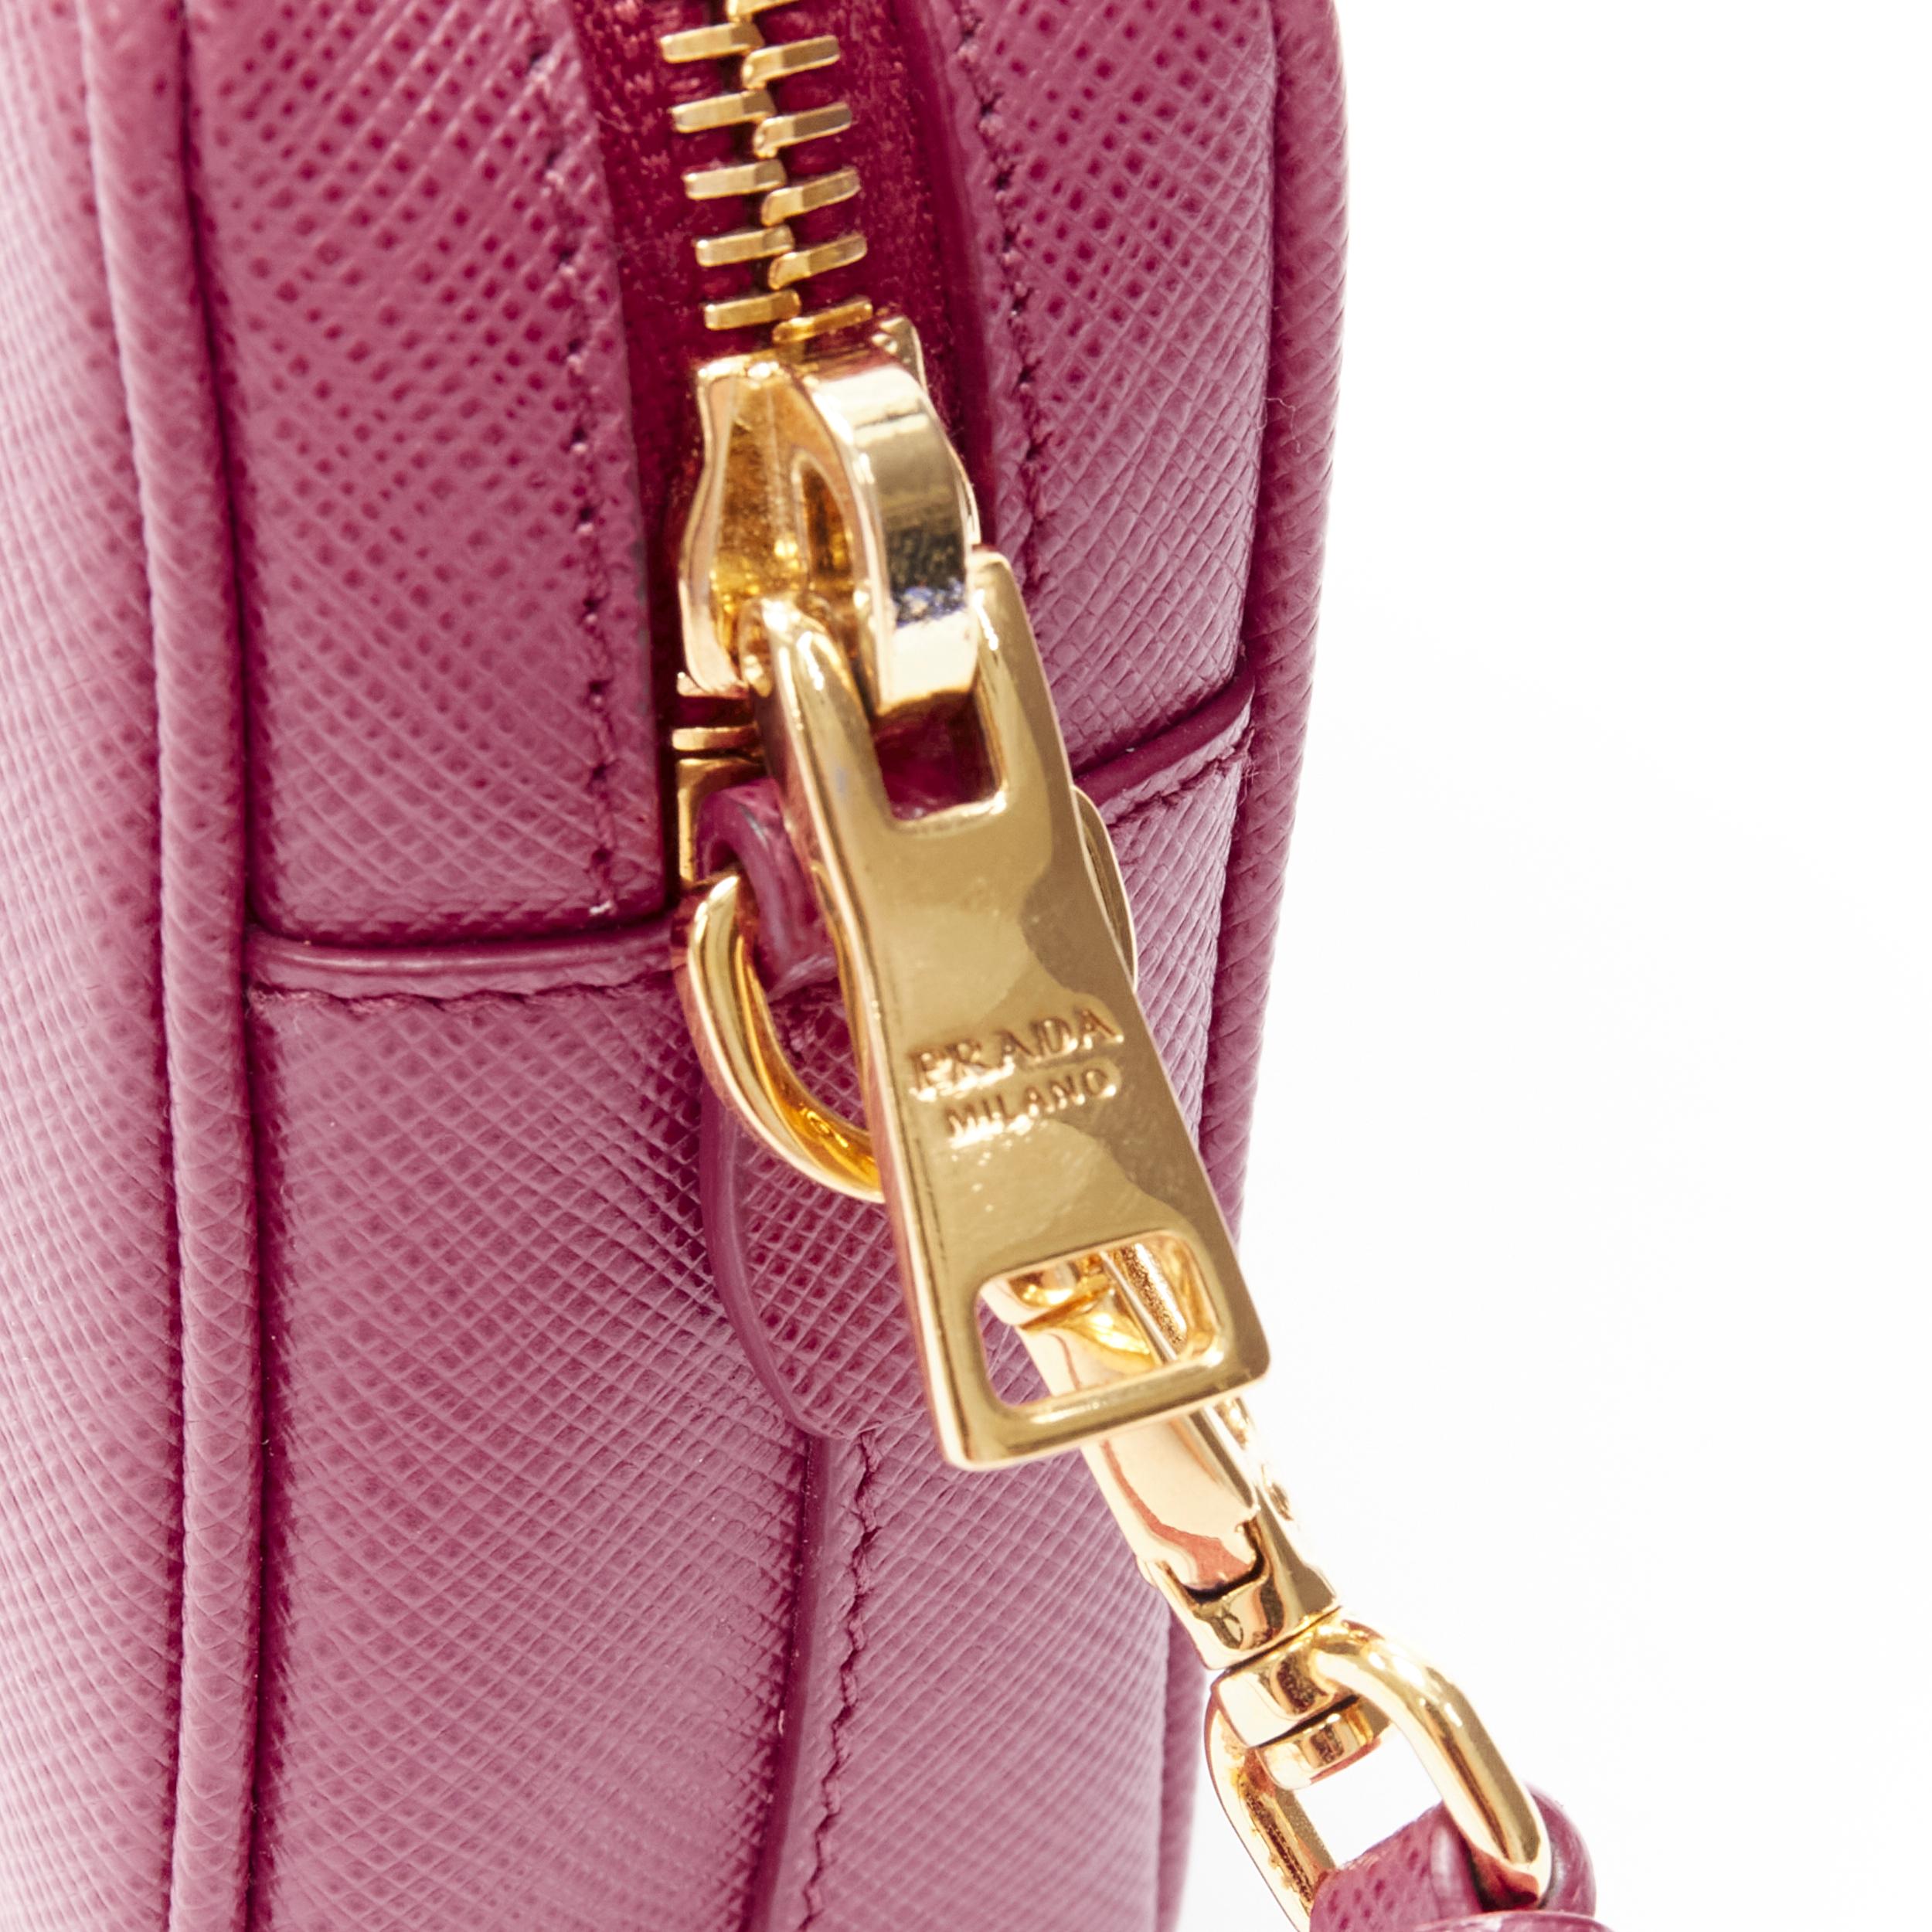 Women's PRADA Bandoliera Bruyere pink saffiano leather gold logo crossbody camera bag